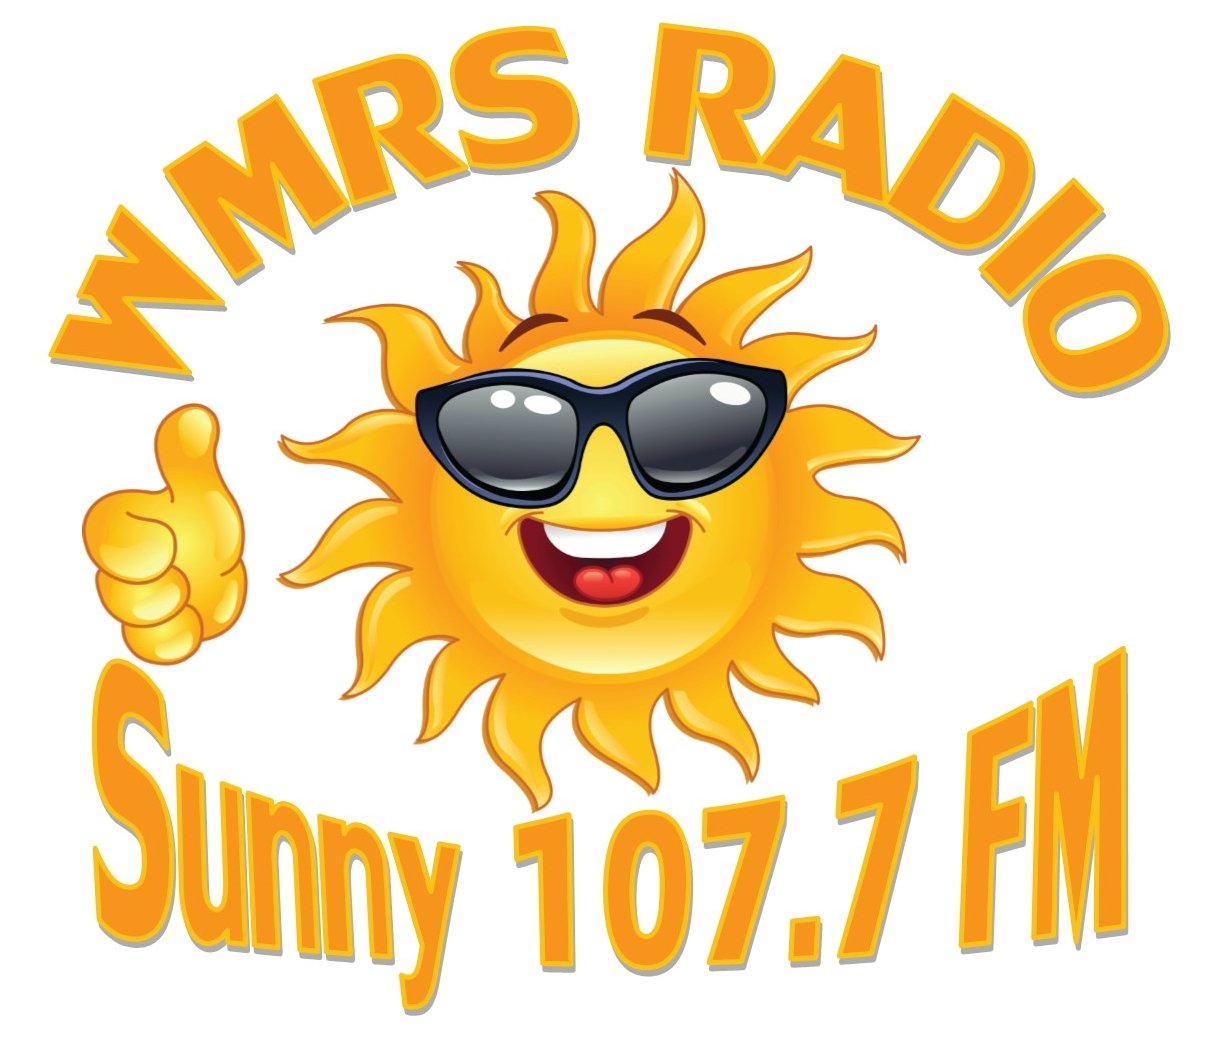 bell Faial one WMRS Radio/Sunny 107.7 FM